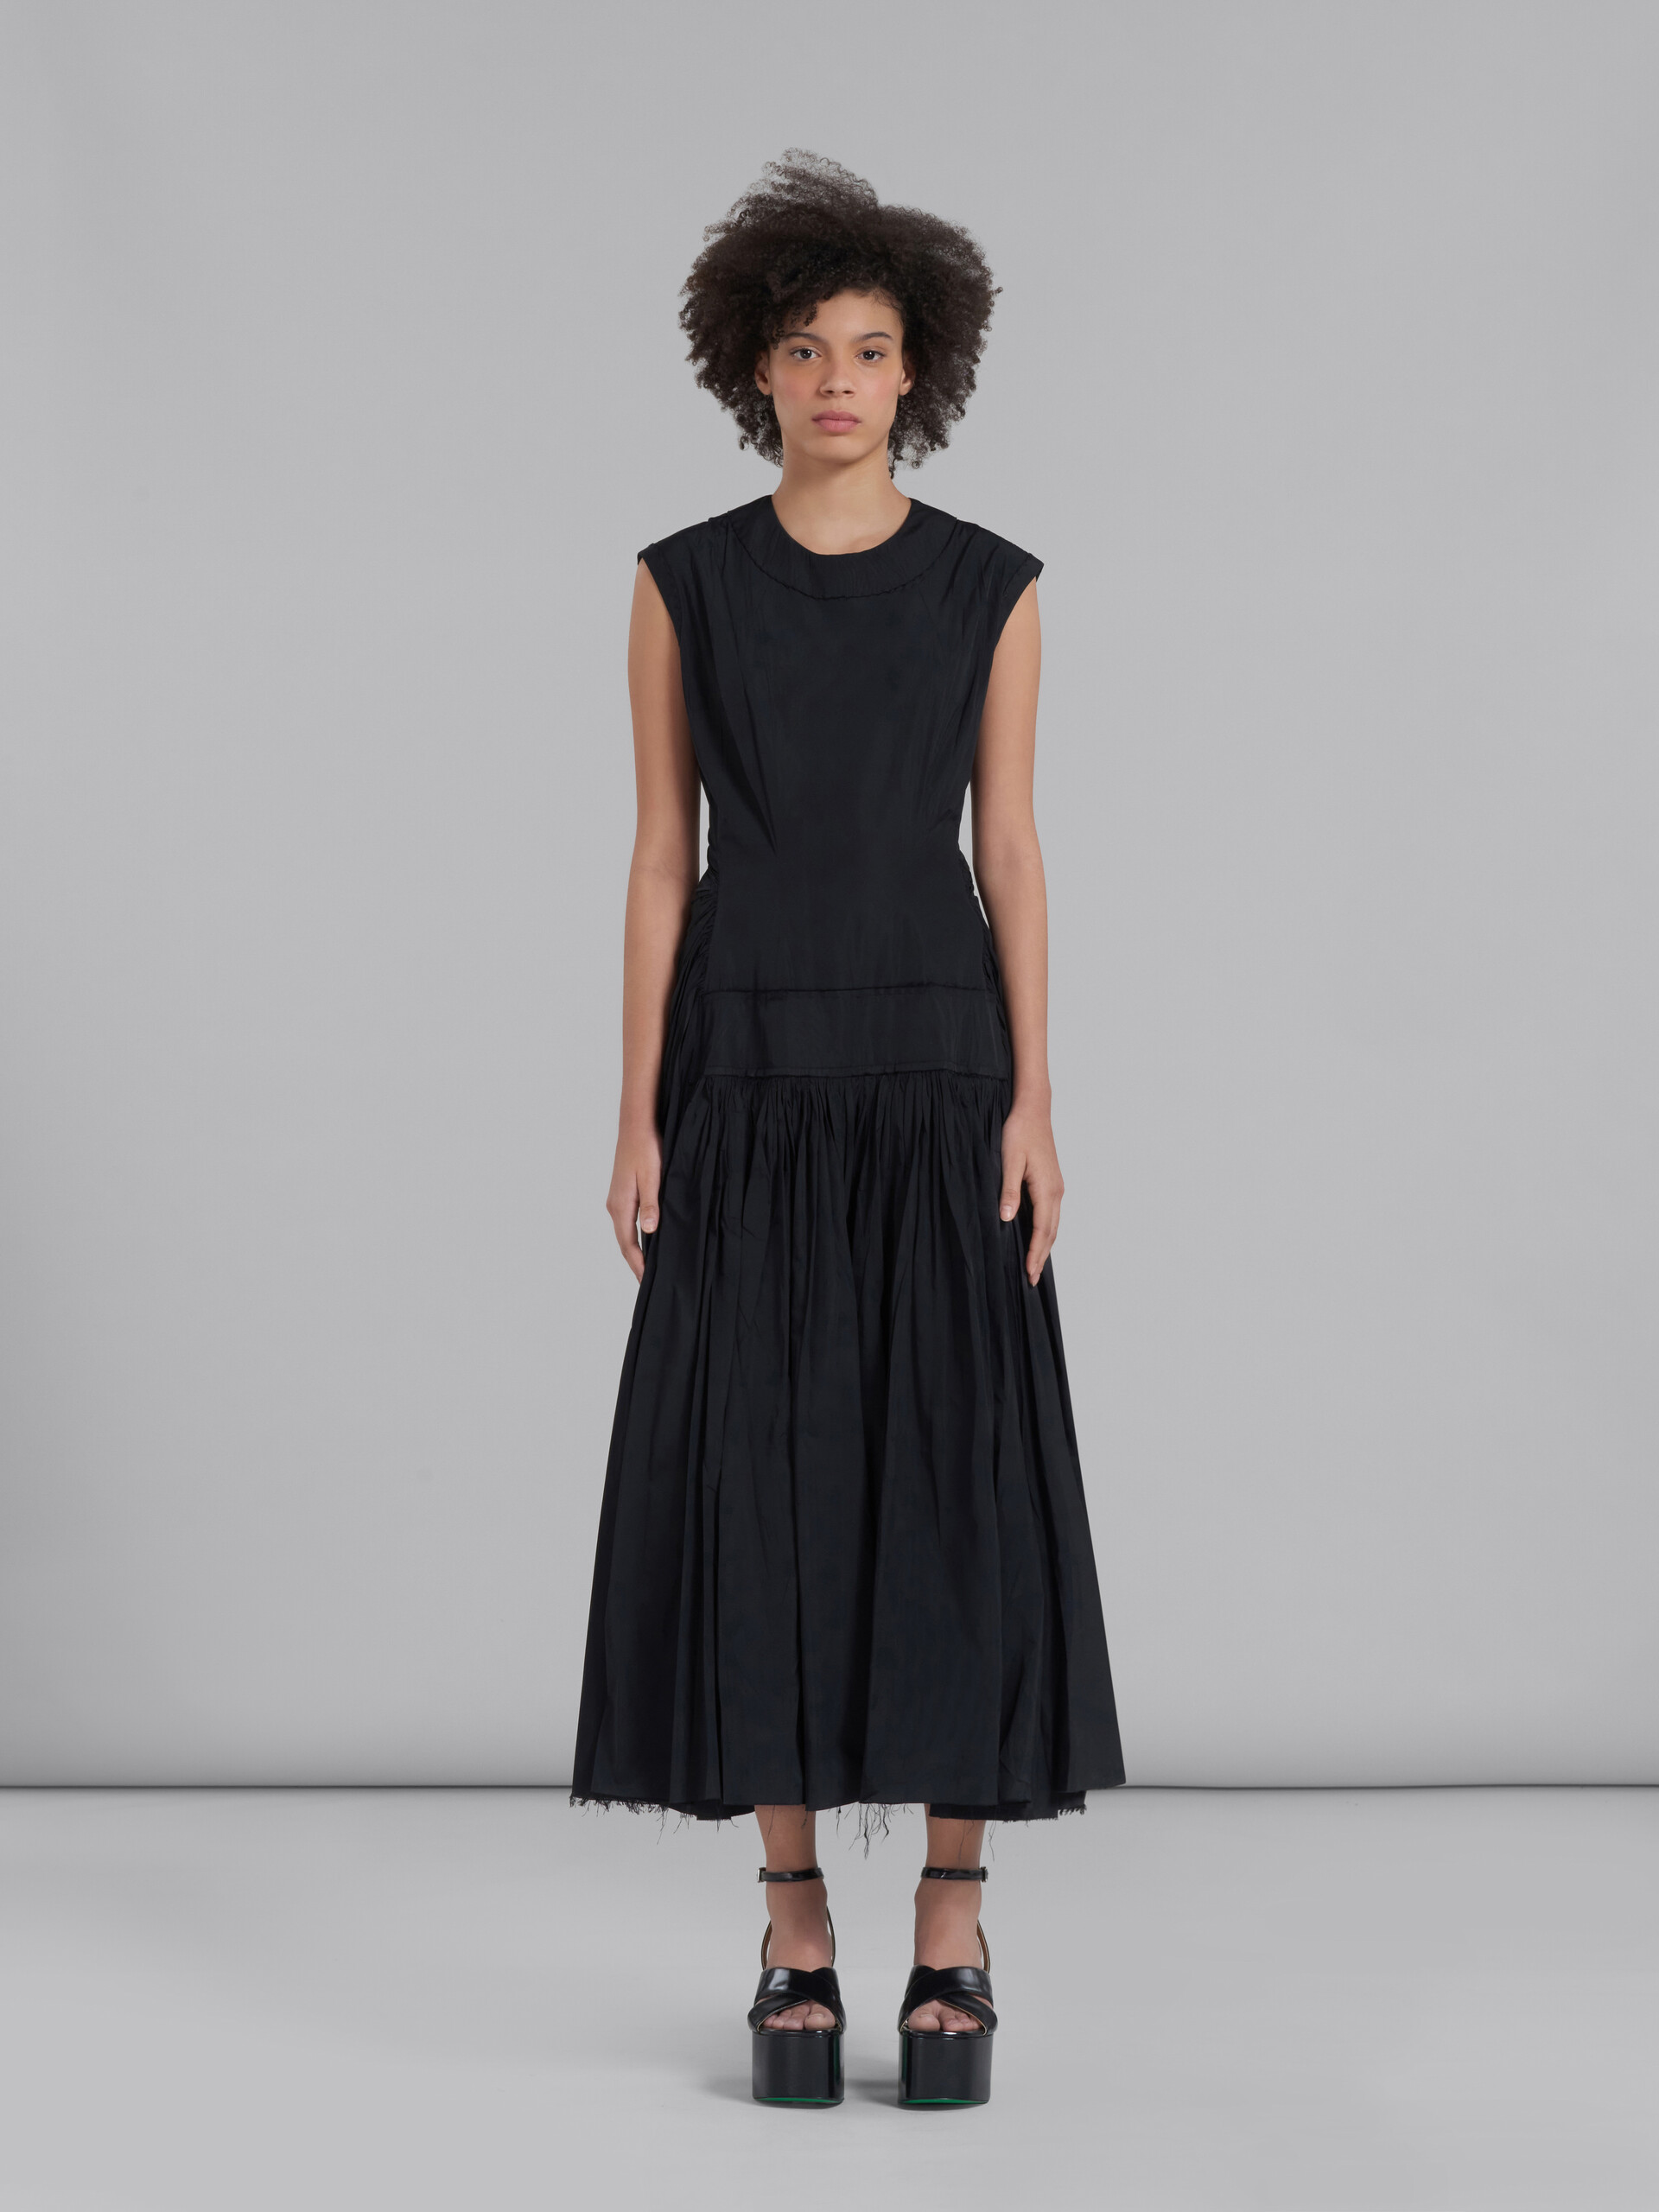 Black taffeta dress with apron front - Dresses - Image 2